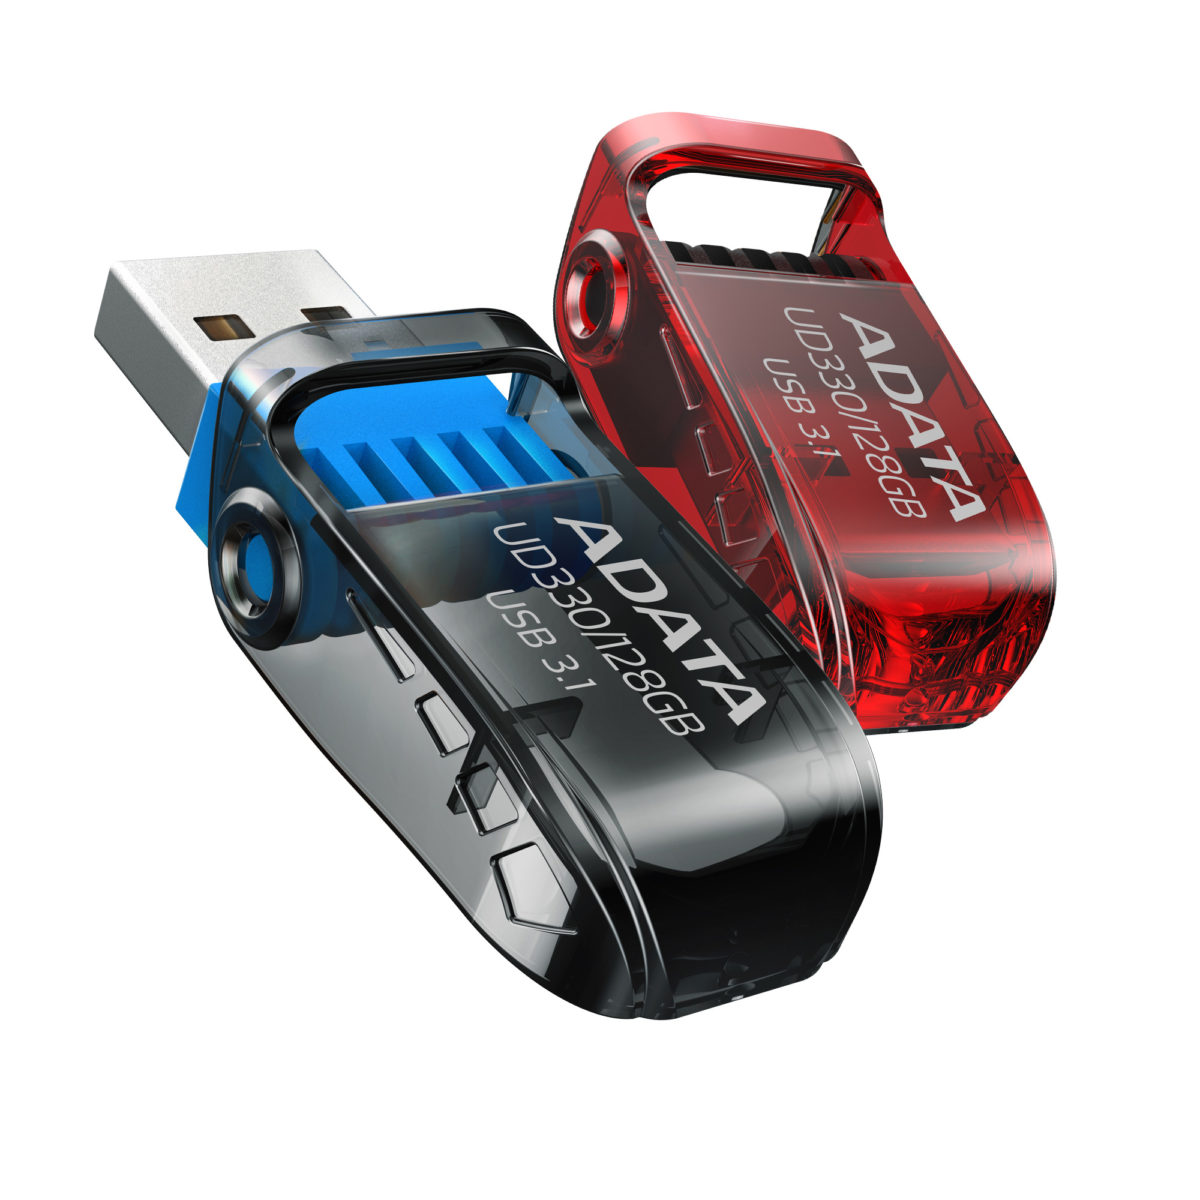 ADATA presenta las unidades flash USB UD230 y UD330